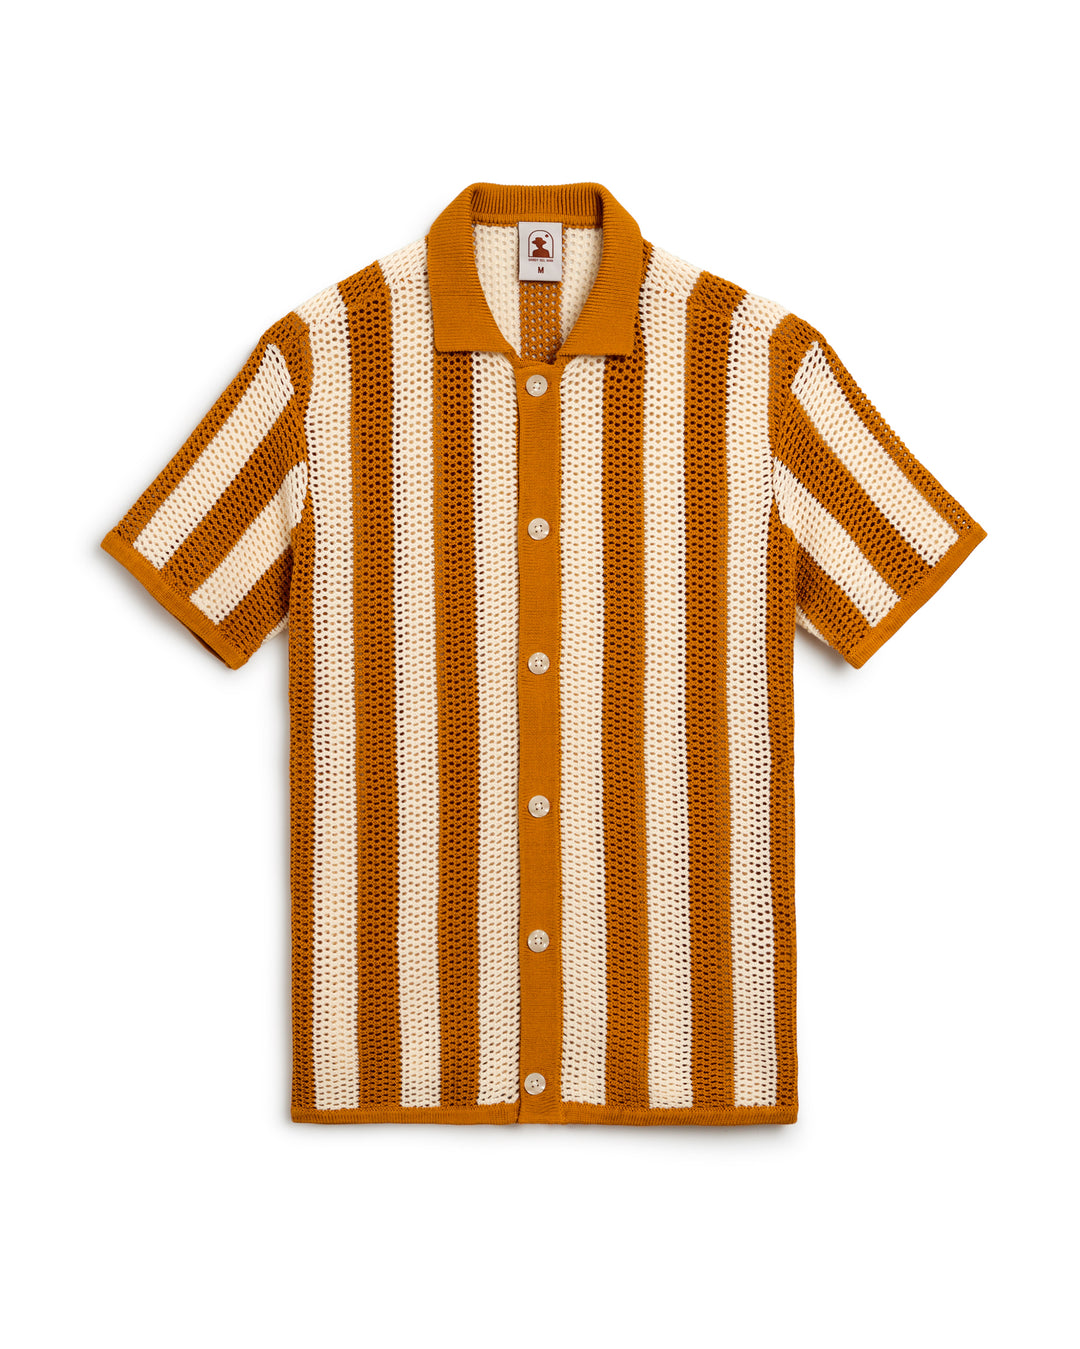 A Dominica Crochet Shirt - Burnt Sienna Stripe made by Dandy Del Mar.